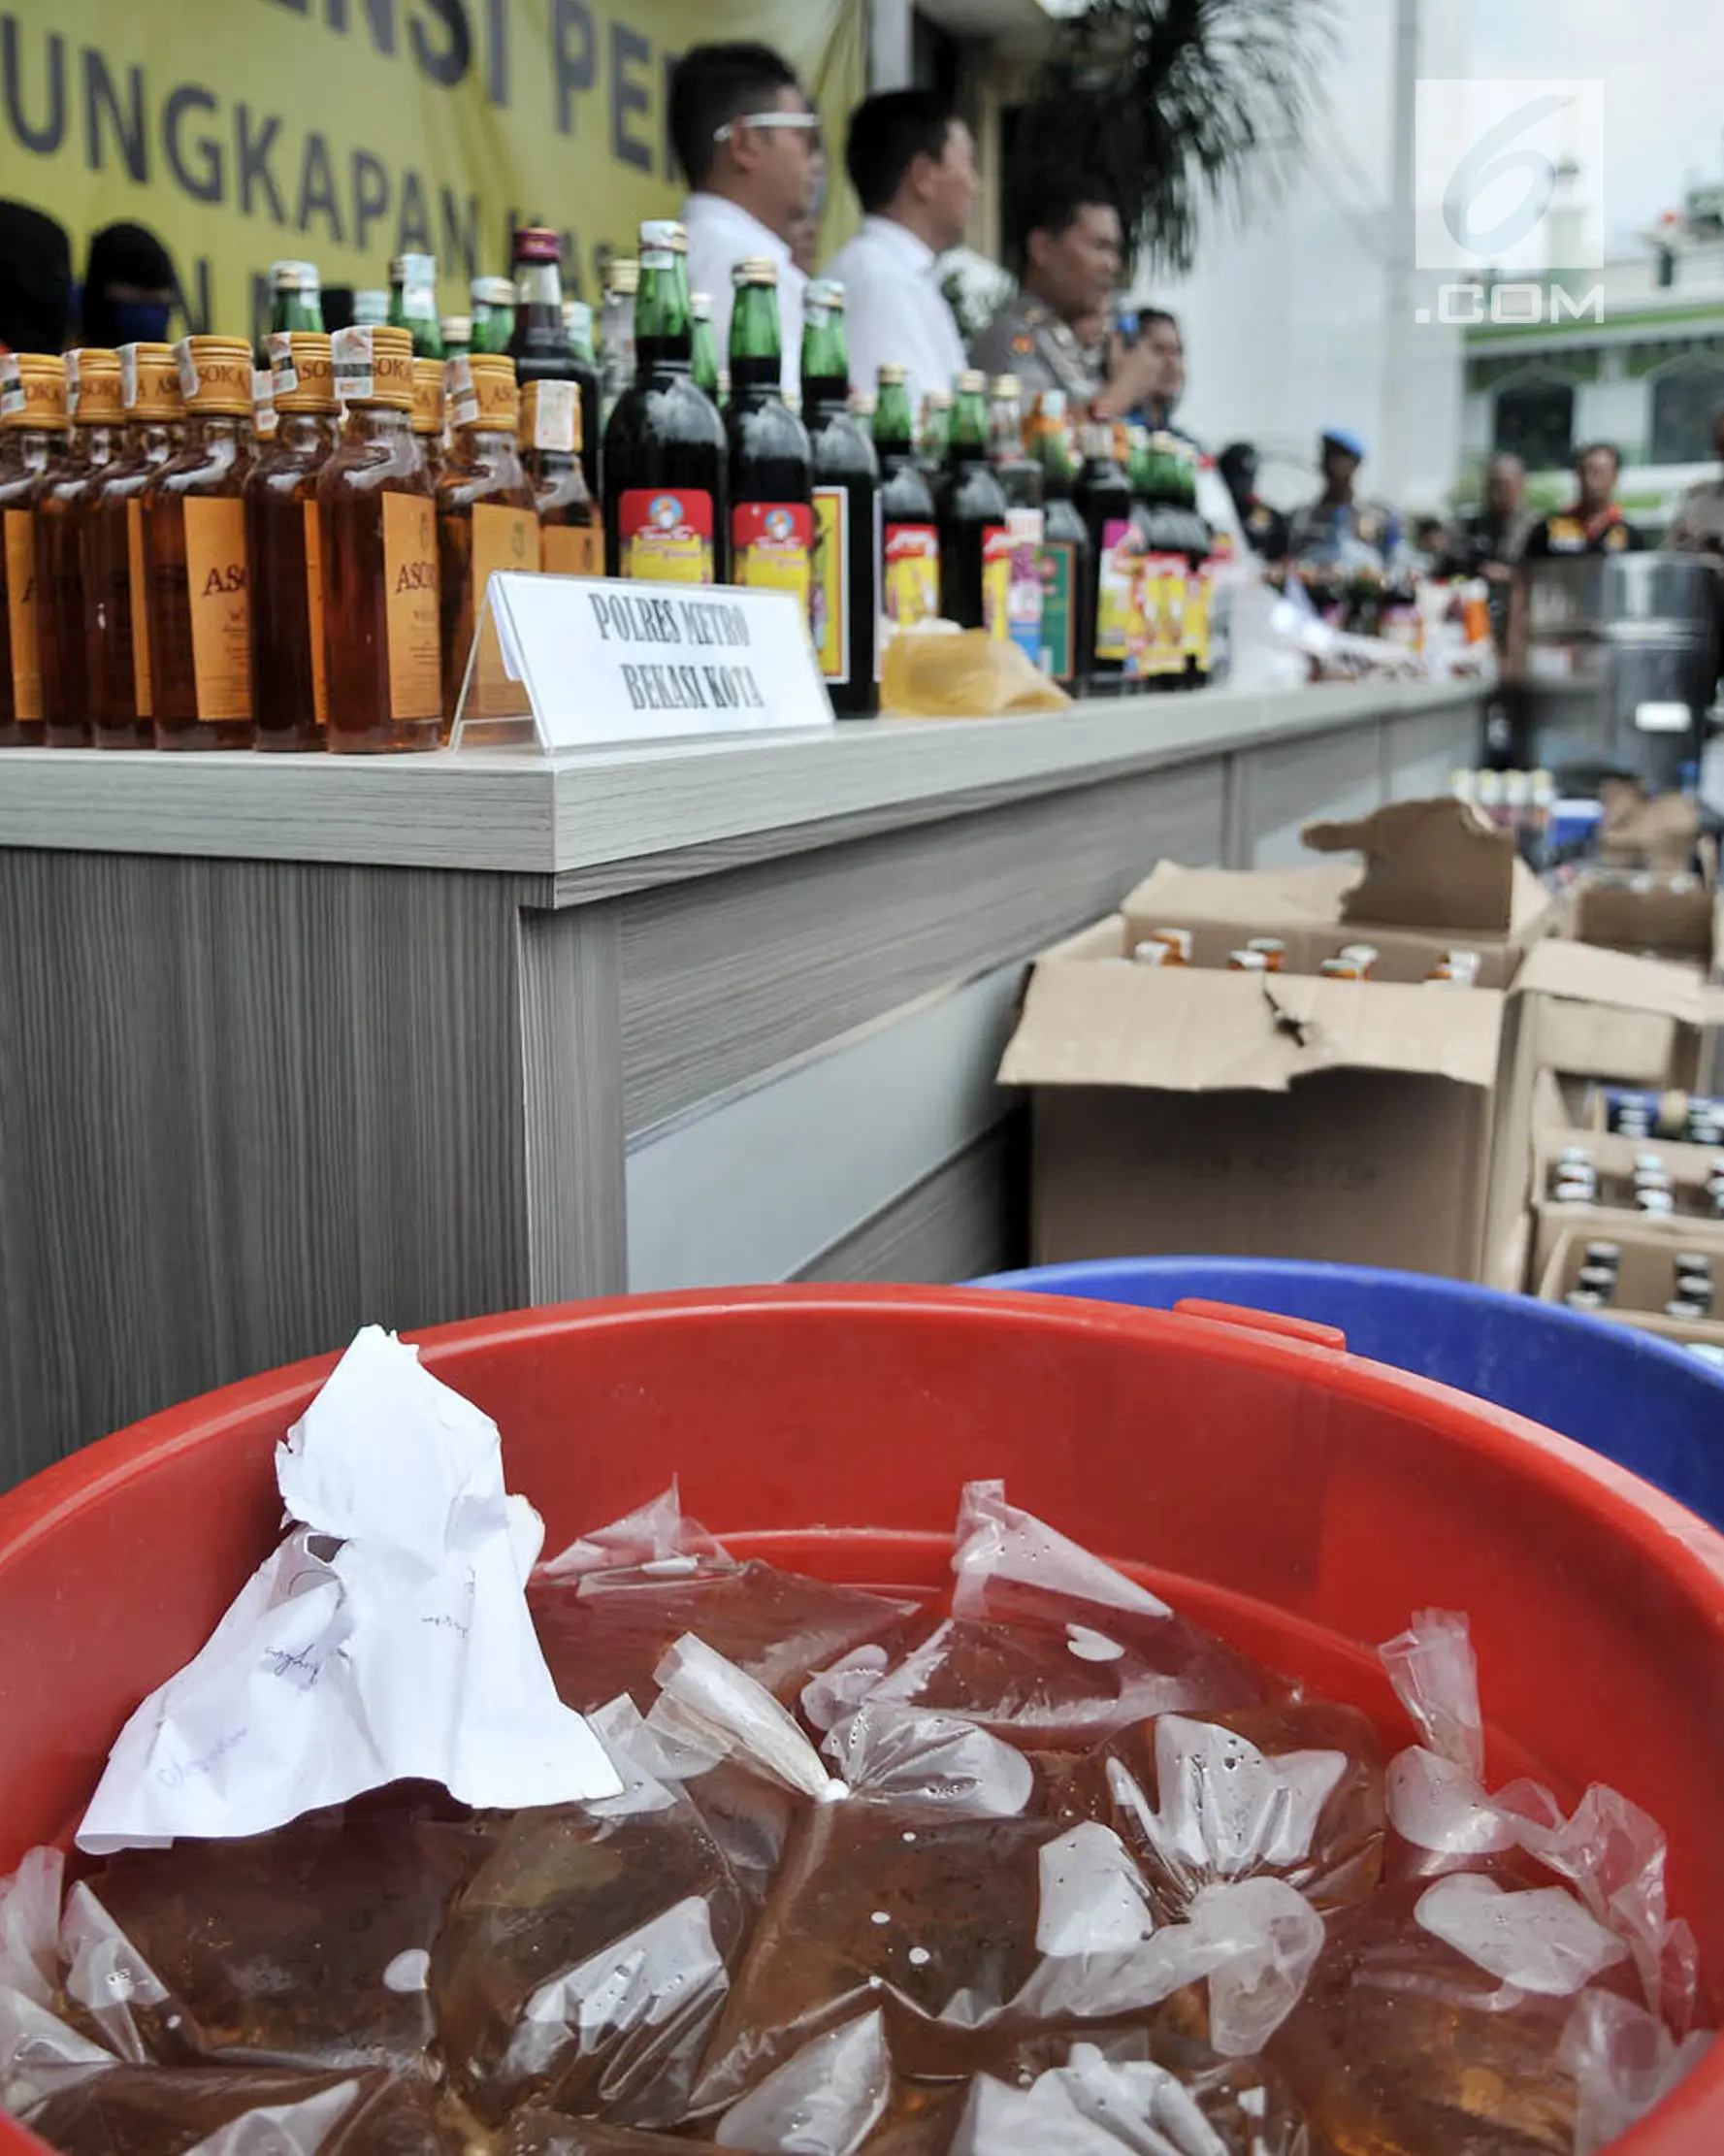 Barang bukti miras oplosan saat dihadirkan dalam rilis di Mapolres Jakarta Selatan, Rabu (11/4). Polisi menyita puluhan bungkus miras oplosan, 2 bungkus alkohol, 7 botol Coca Cola, Extra Joss, sirup ABC, dan uang Rp 261.000. (Merdeka.com/Iqbal Nugroho)